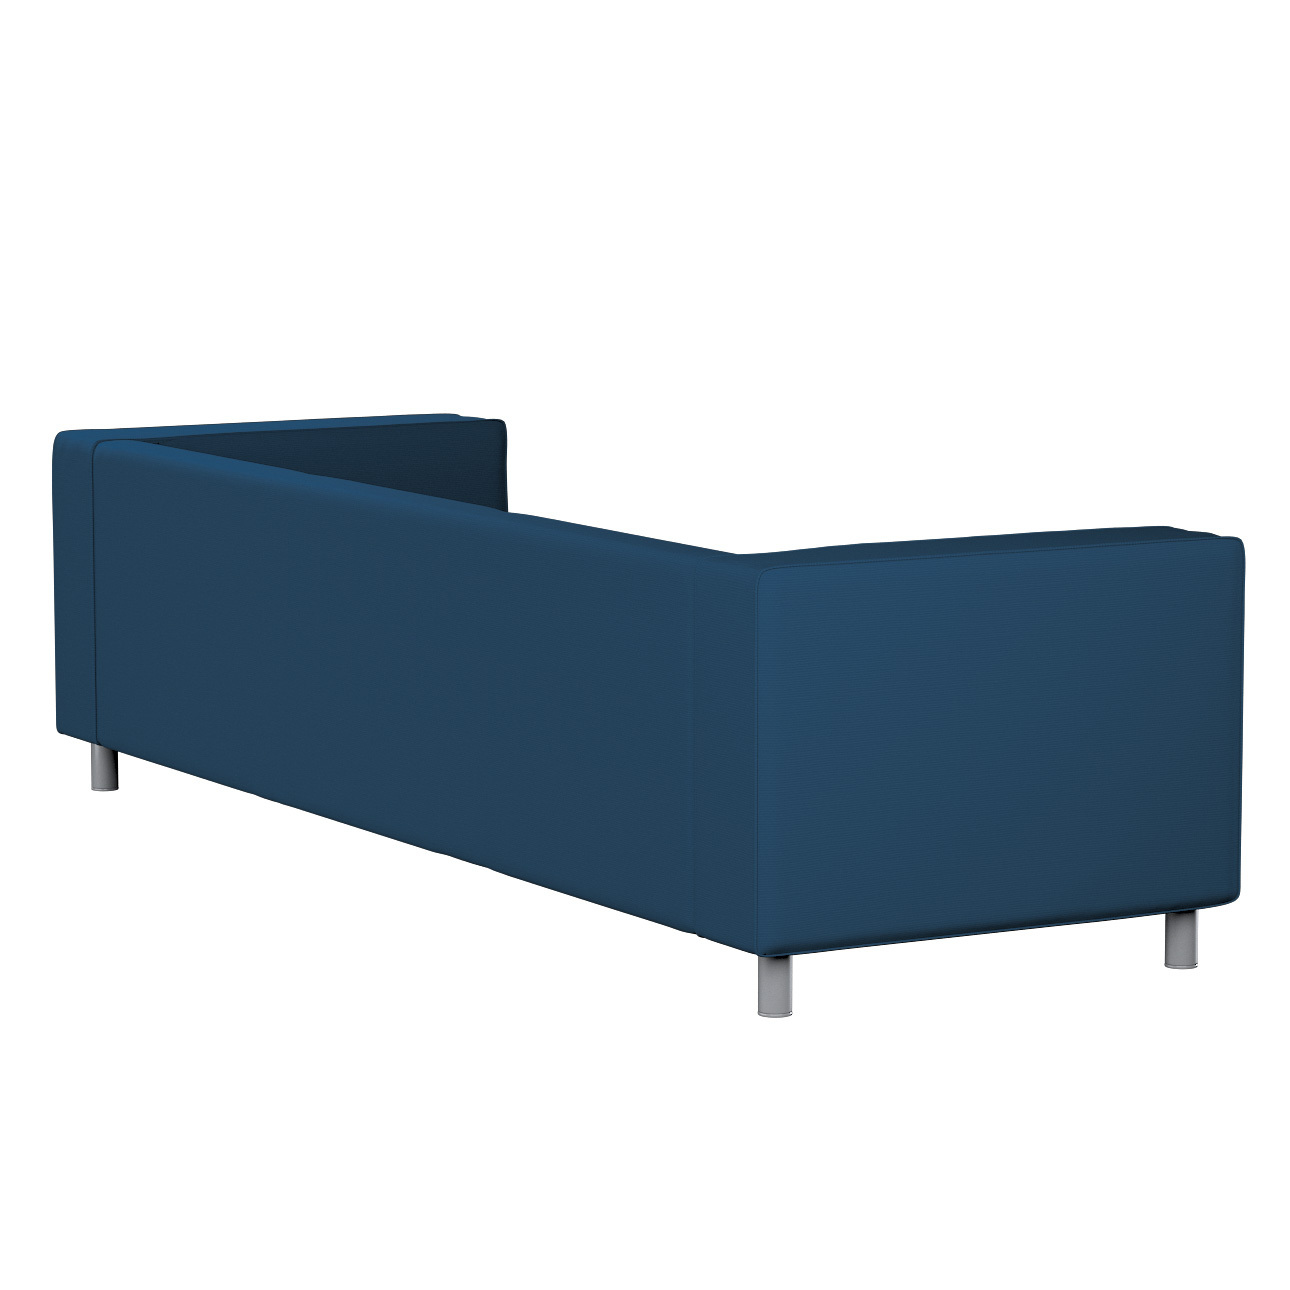 Bezug für Klippan 4-Sitzer Sofa, marinenblau , Bezug für Klippan 4-Sitzer, günstig online kaufen